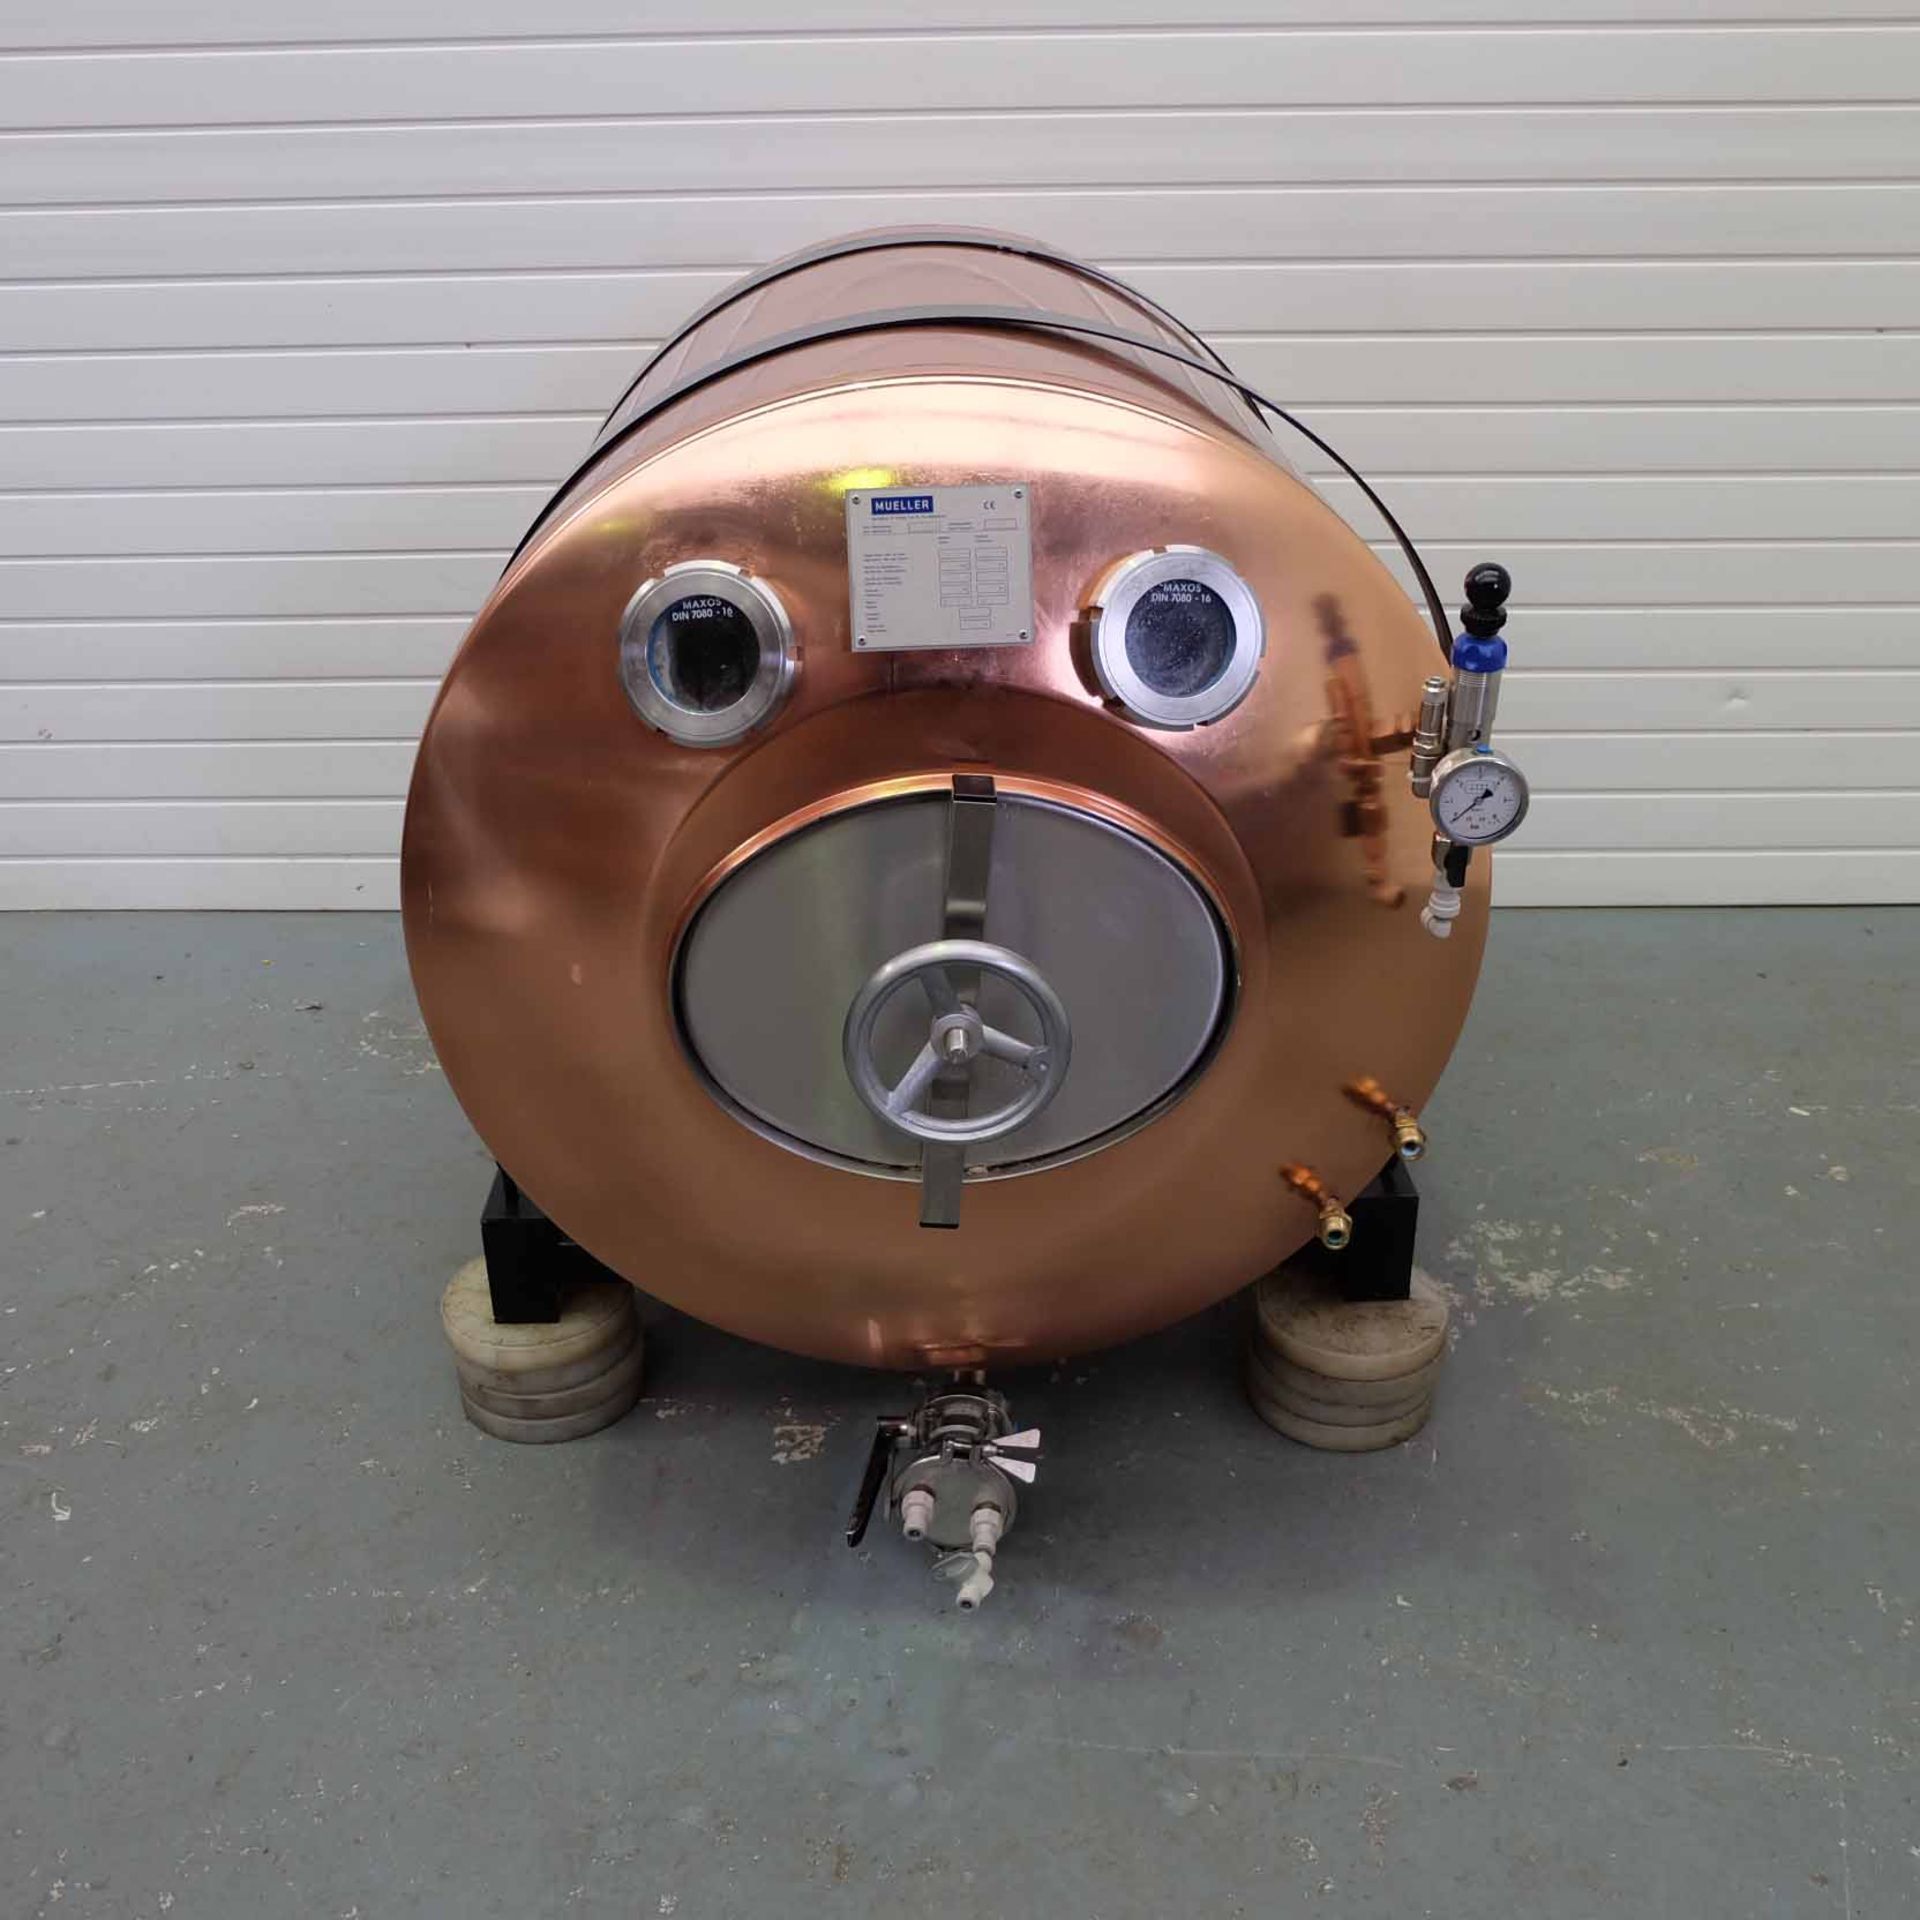 Paul Mueller Ltd. (Missouri USA) Copper Serving Beer Tank. Model 500Ltr. With Self Cooling Bag in Ta